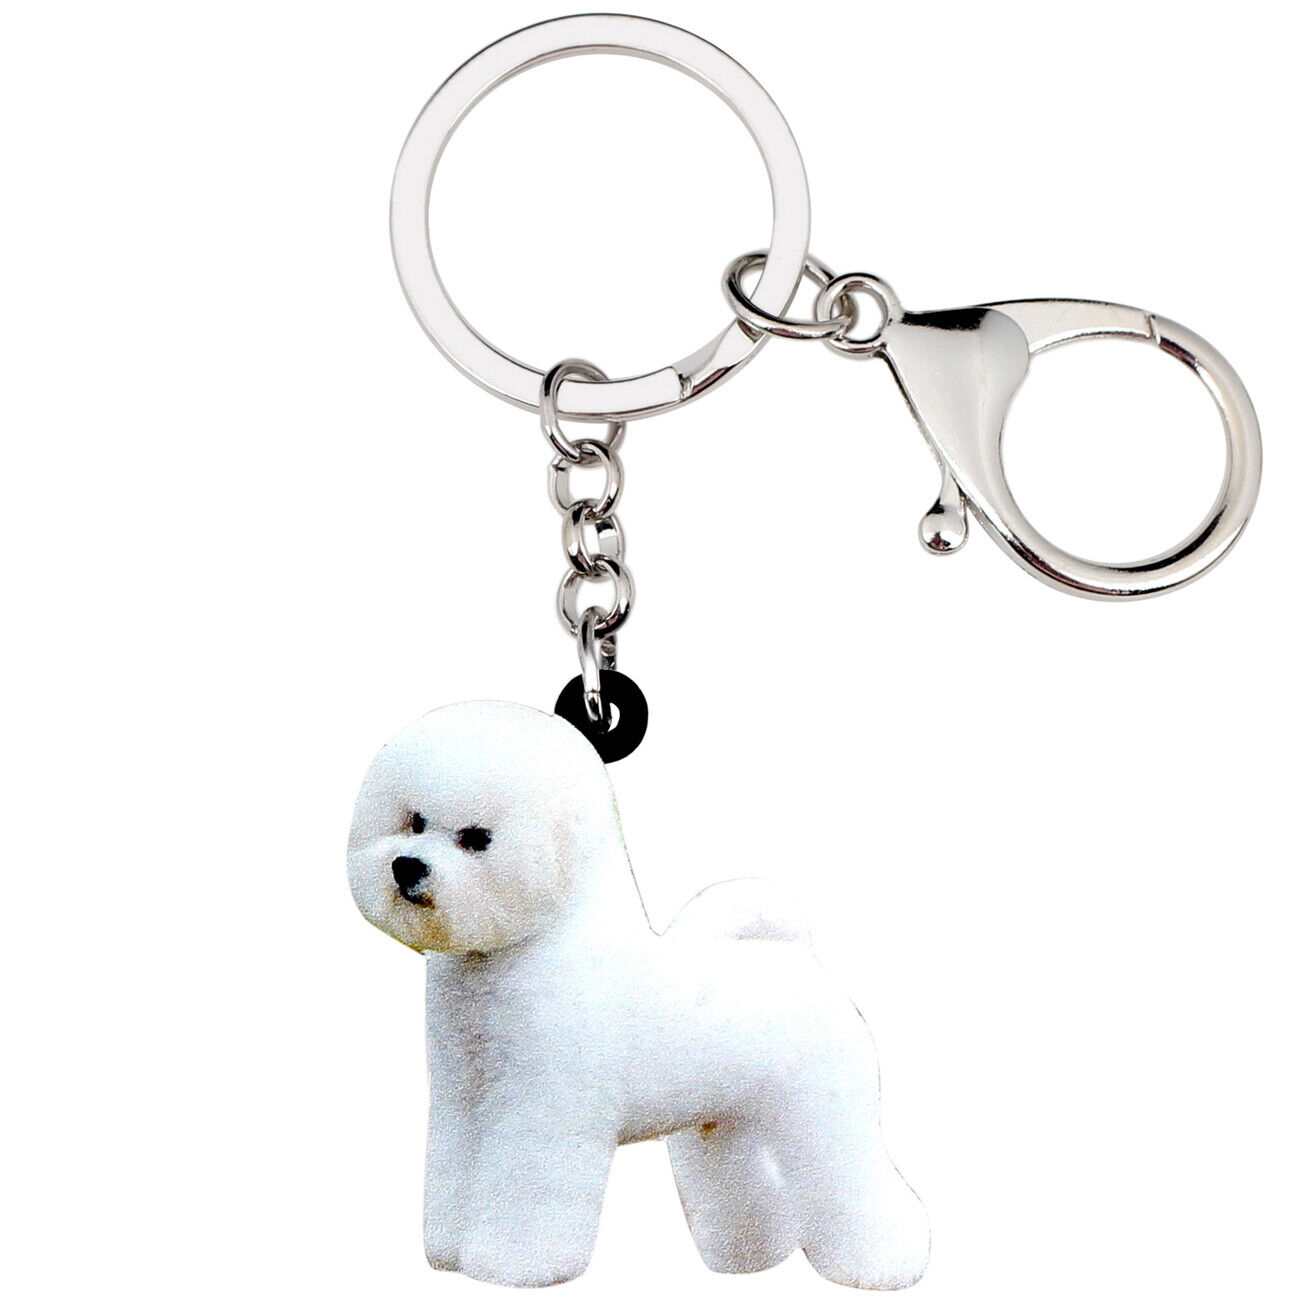 Acrylic White Bichon Frise Dog Keychains Purse Key Ring Pets Jewelry Charms Gift